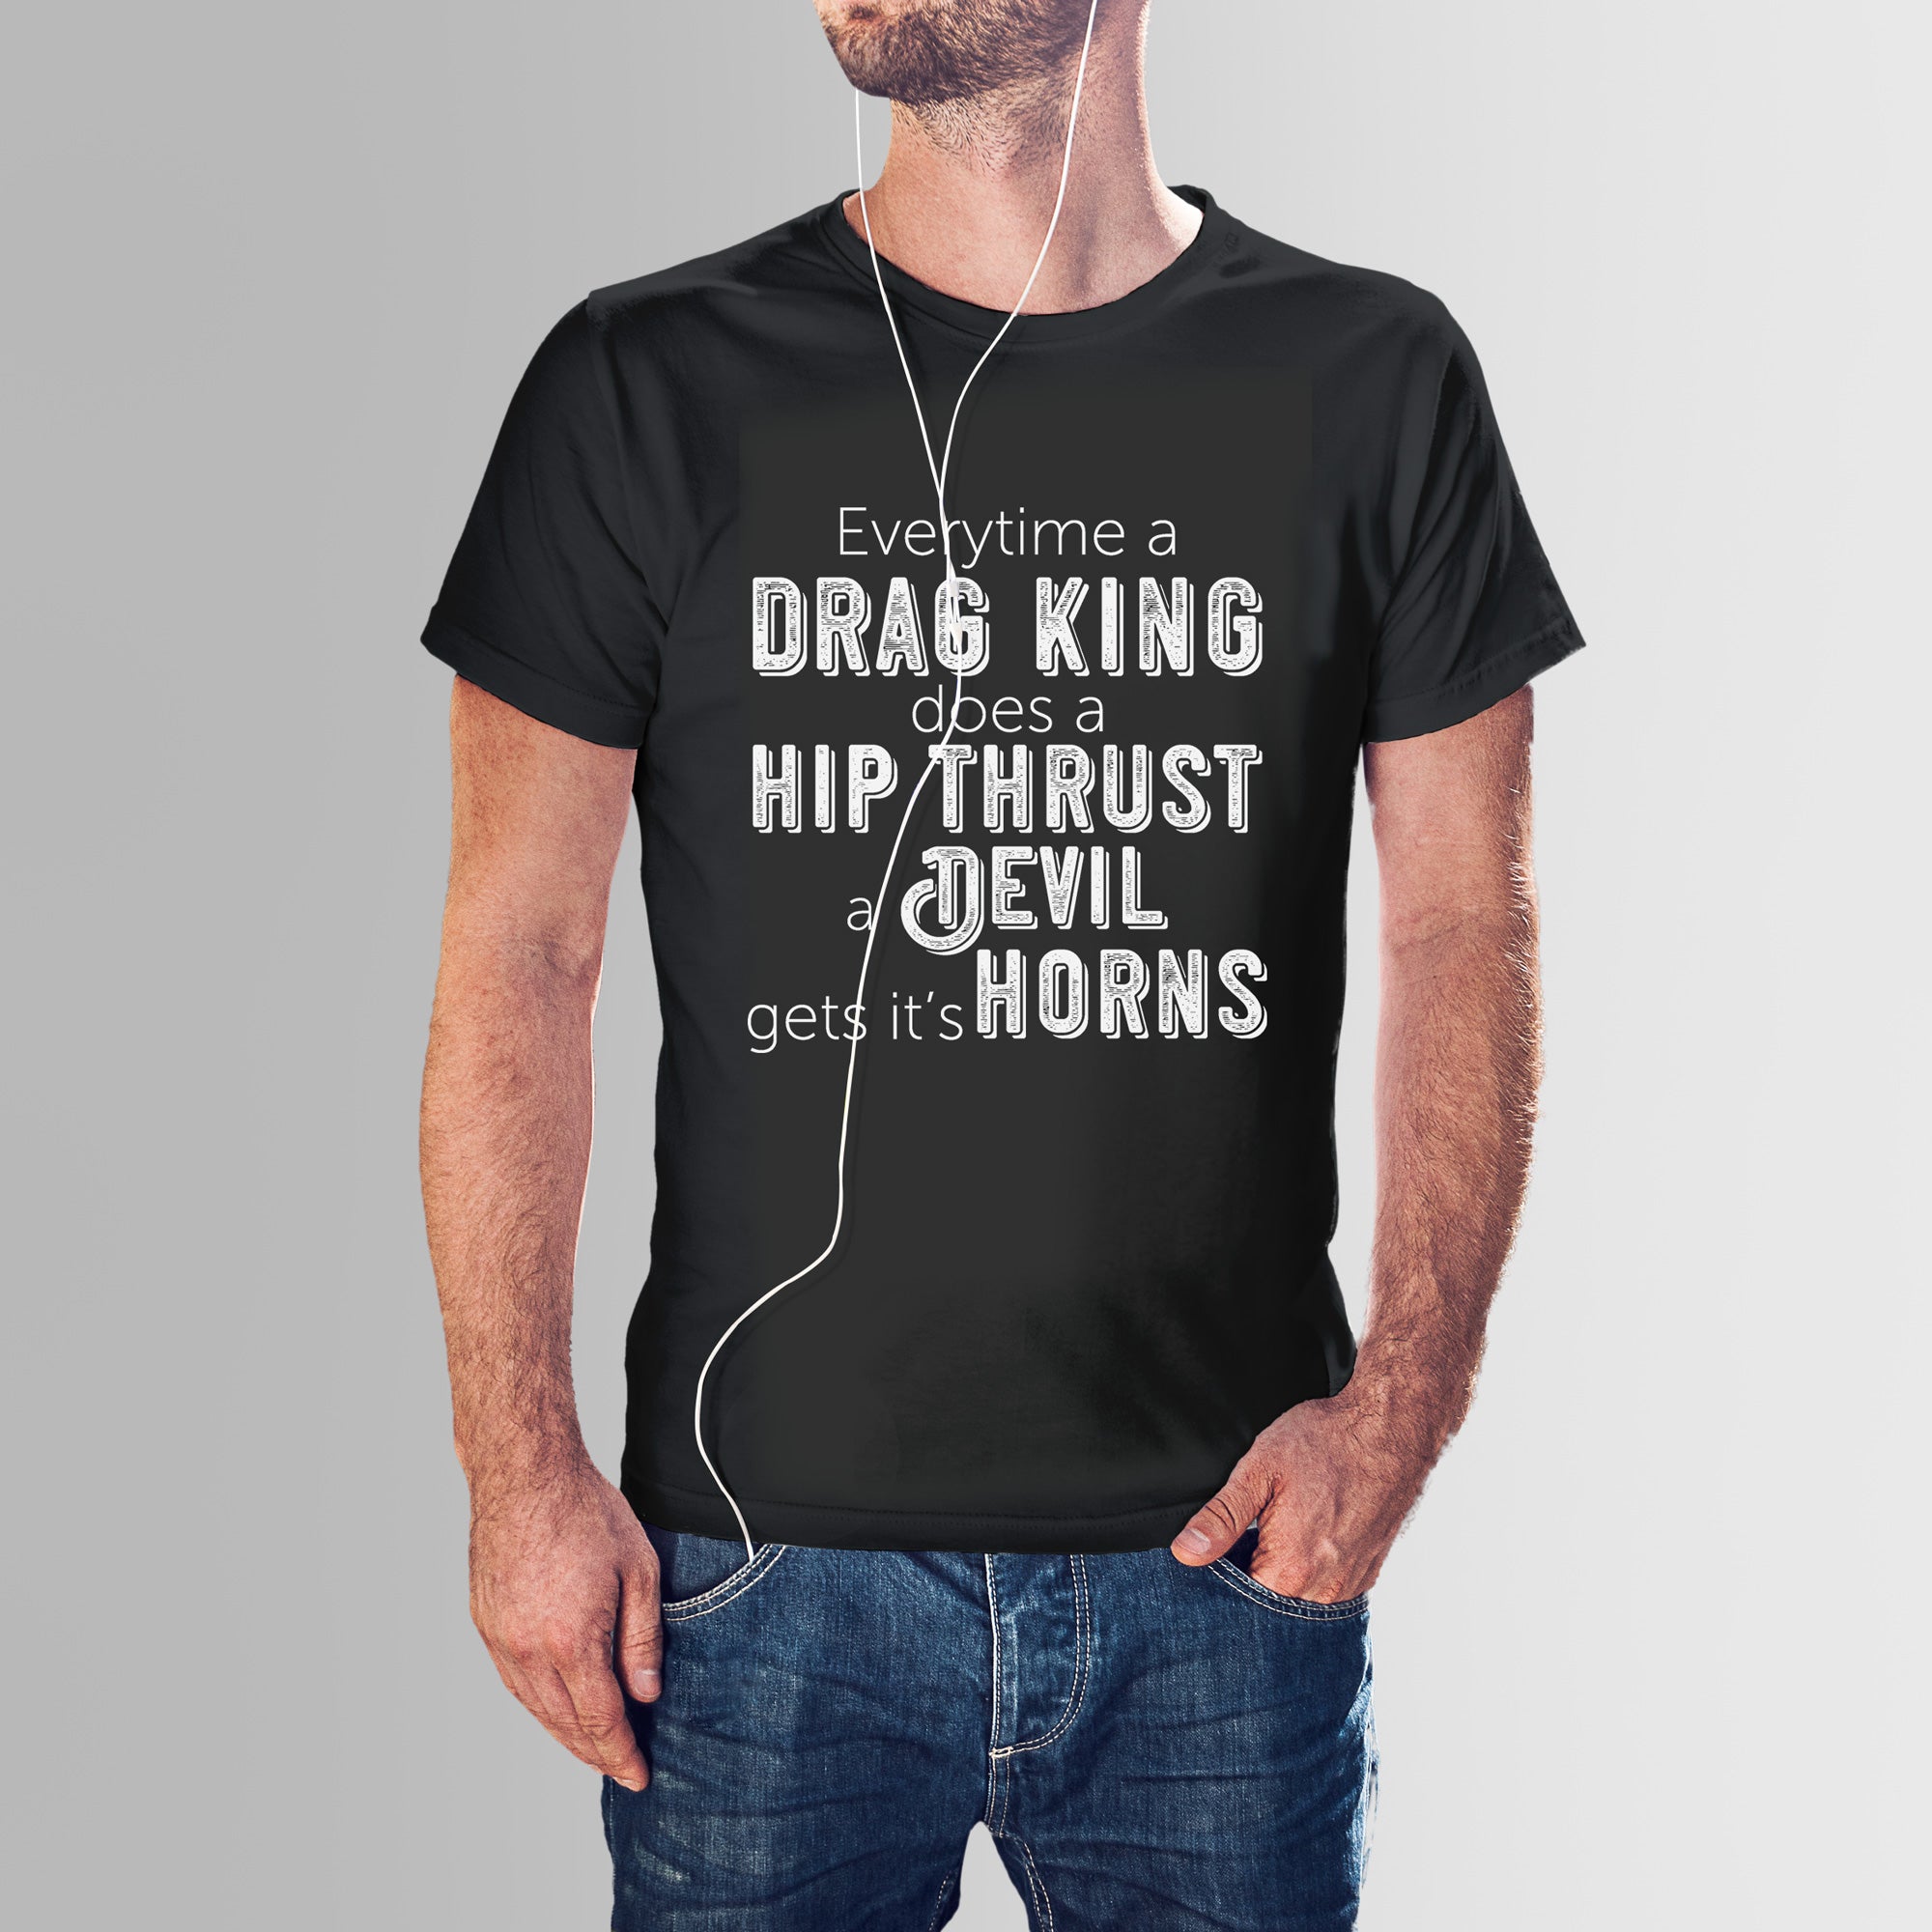 Generic - Drag King Hip Thrust Shirt